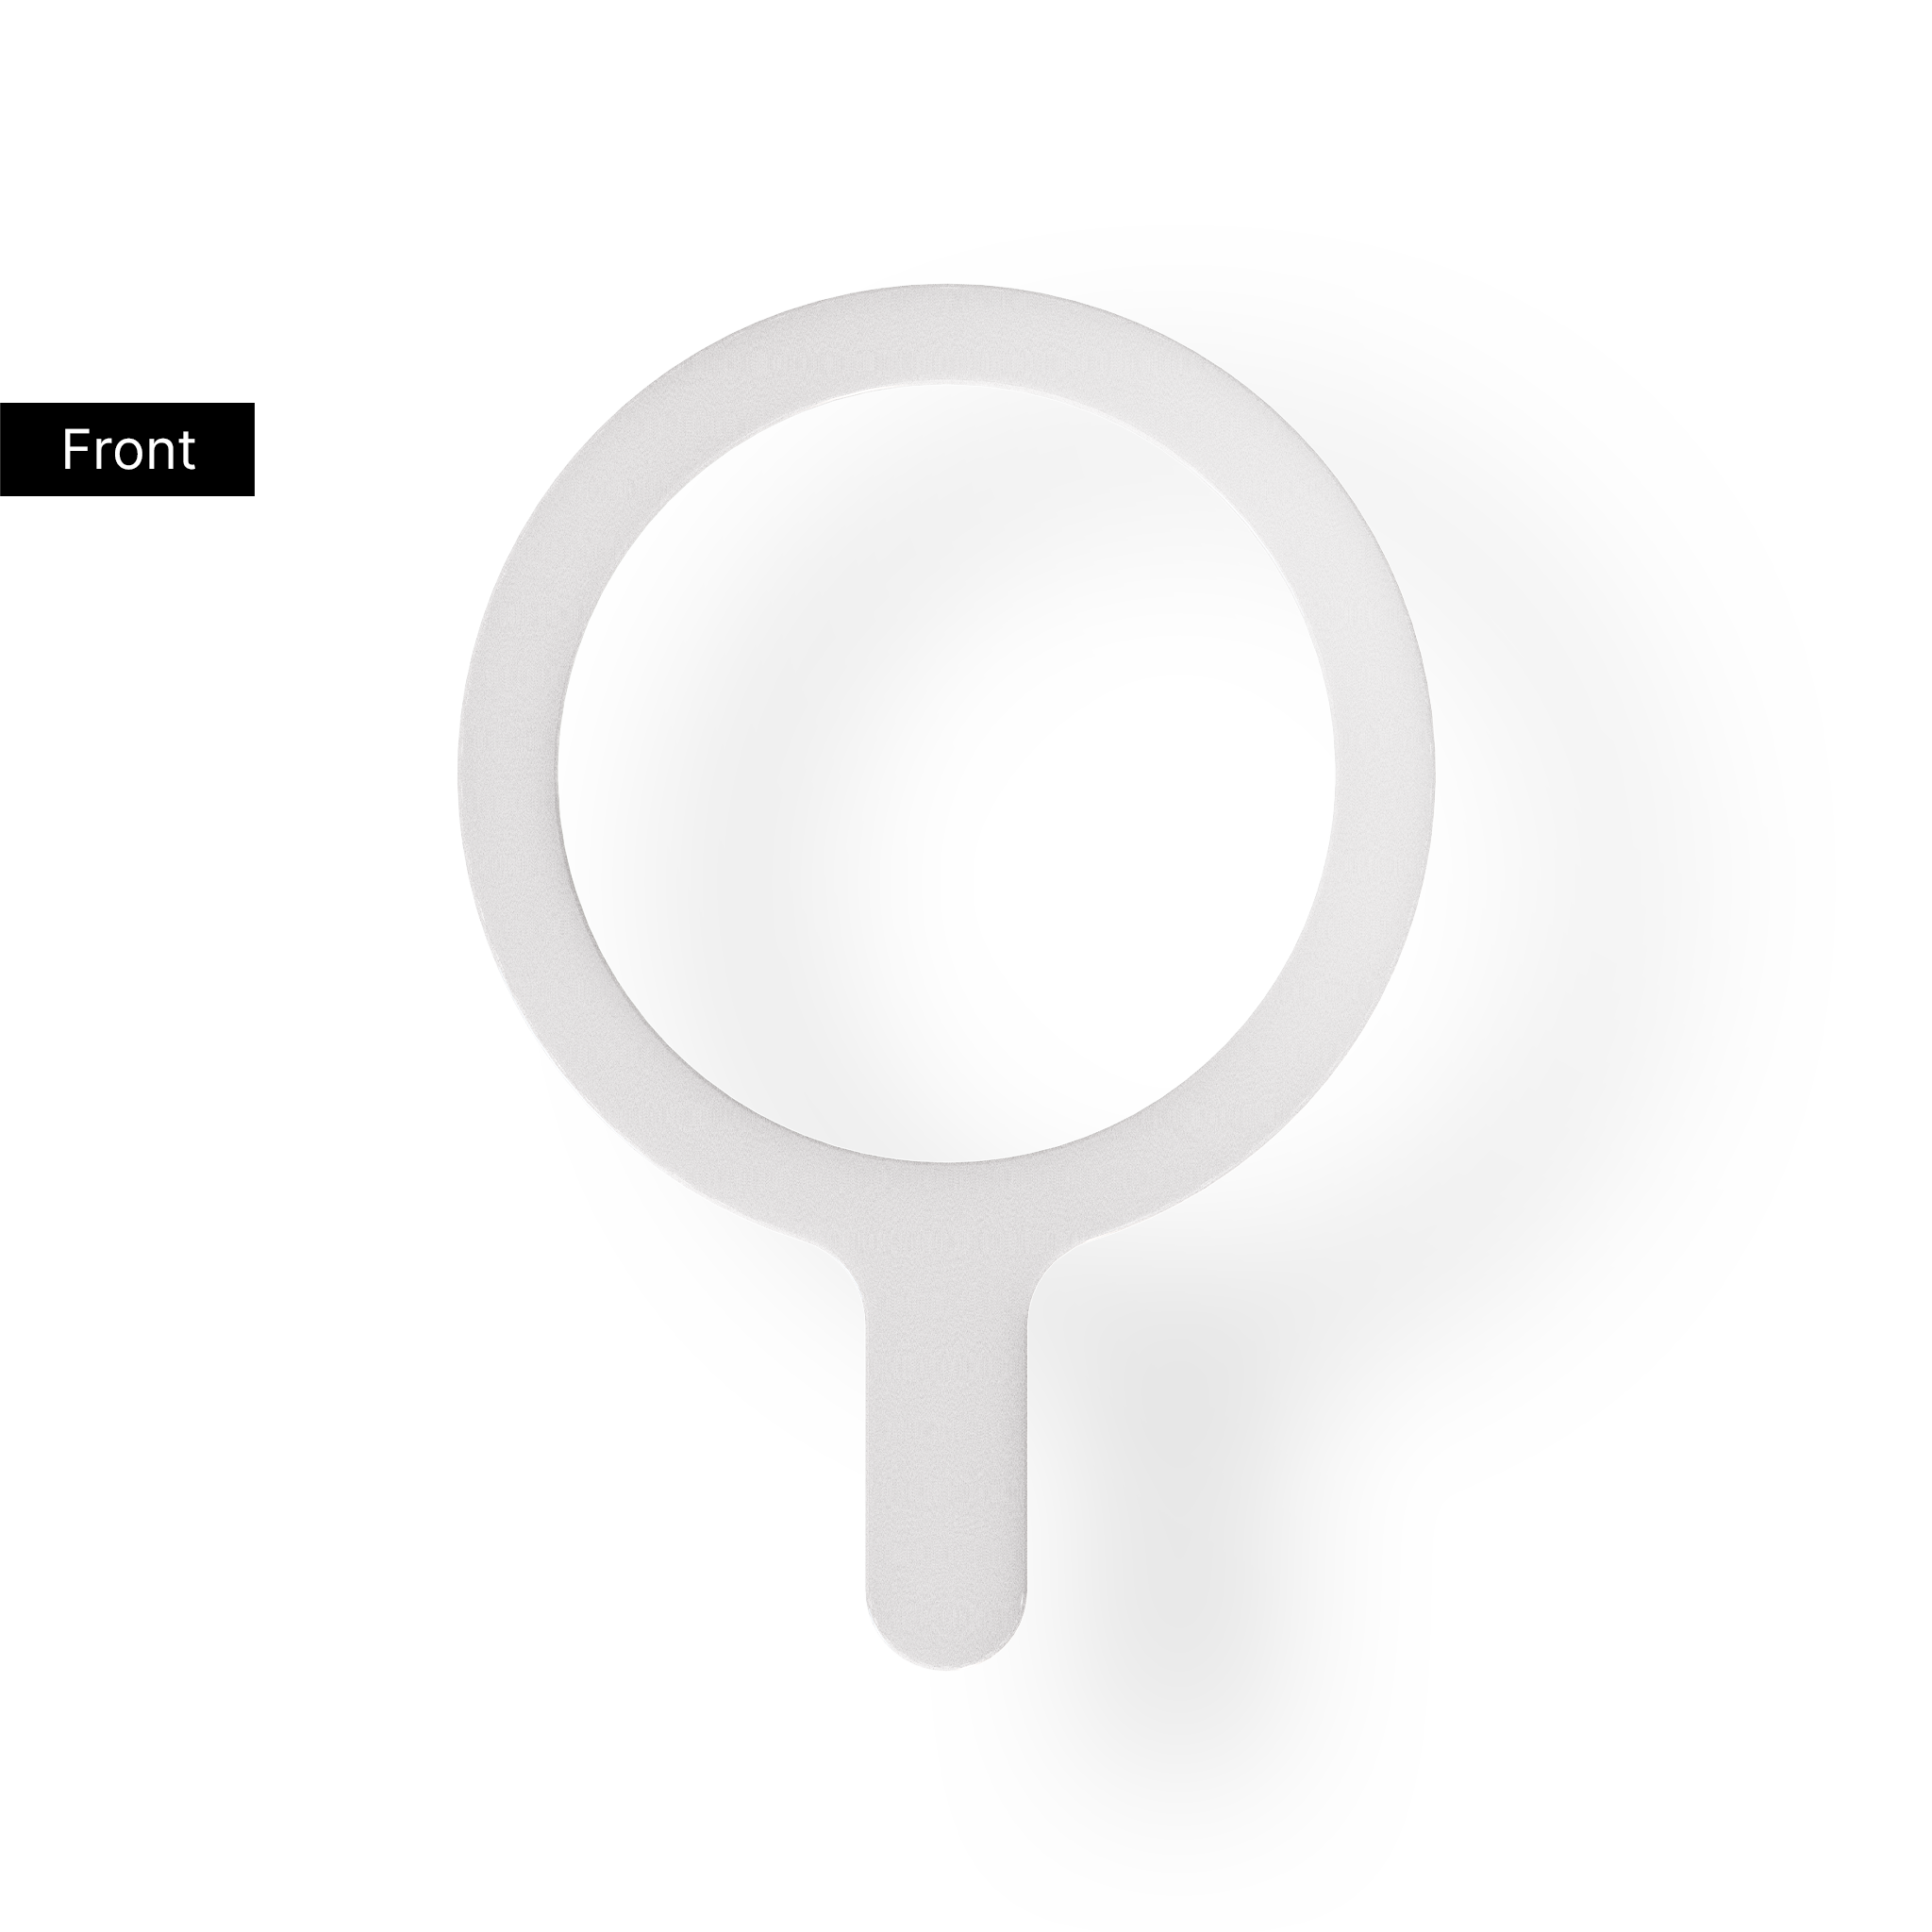 Fjernbar MagSafe-ring, hvit